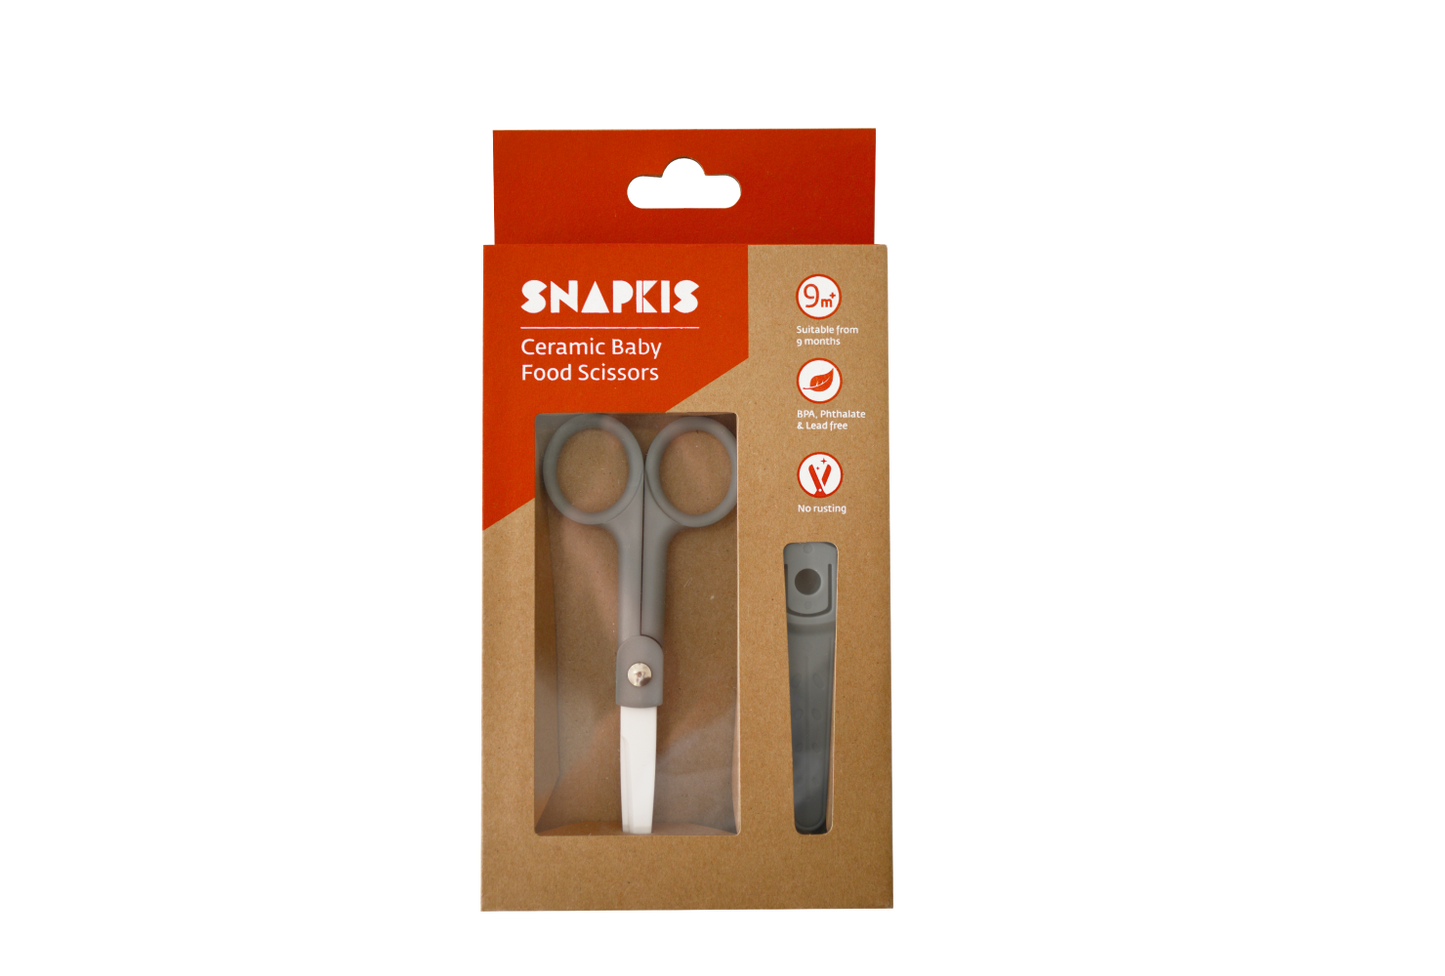 Snapkis Ceramic Baby Food Scissors